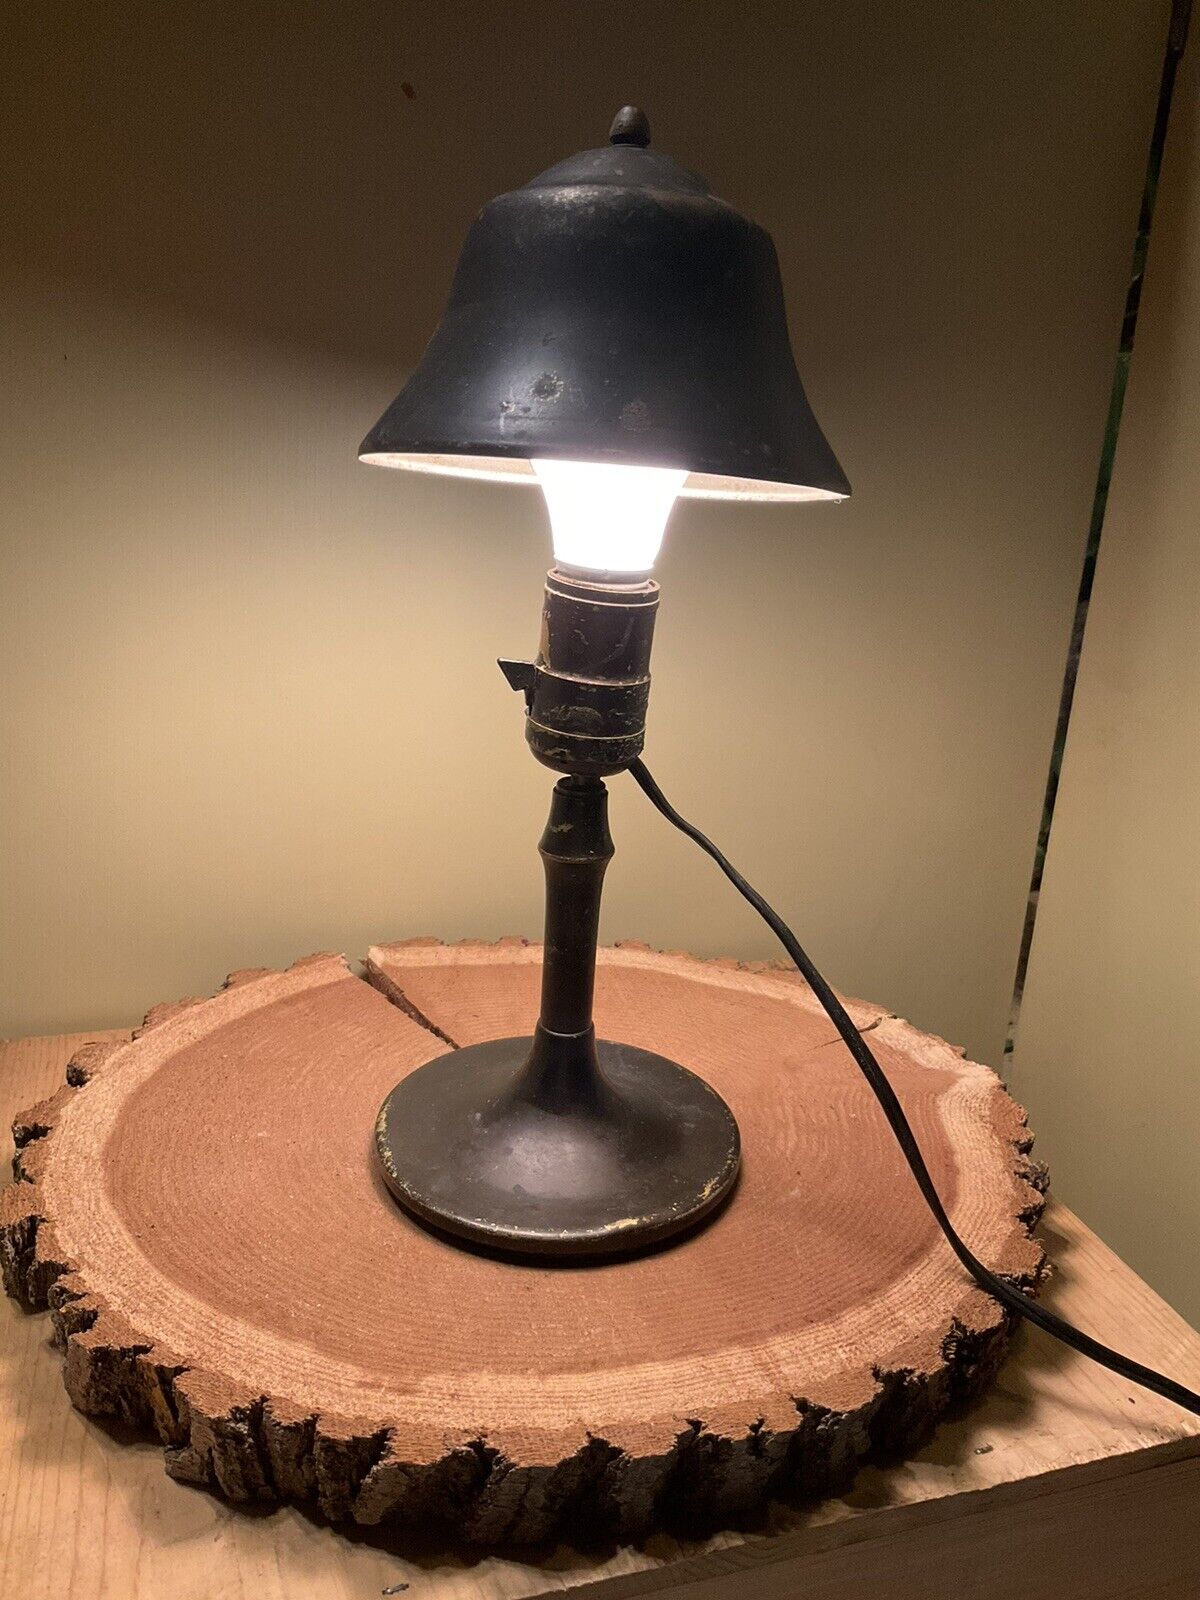 Early Industrial Silvercrest Tilt Lamp Table or Wall Sconce Light 11.5”